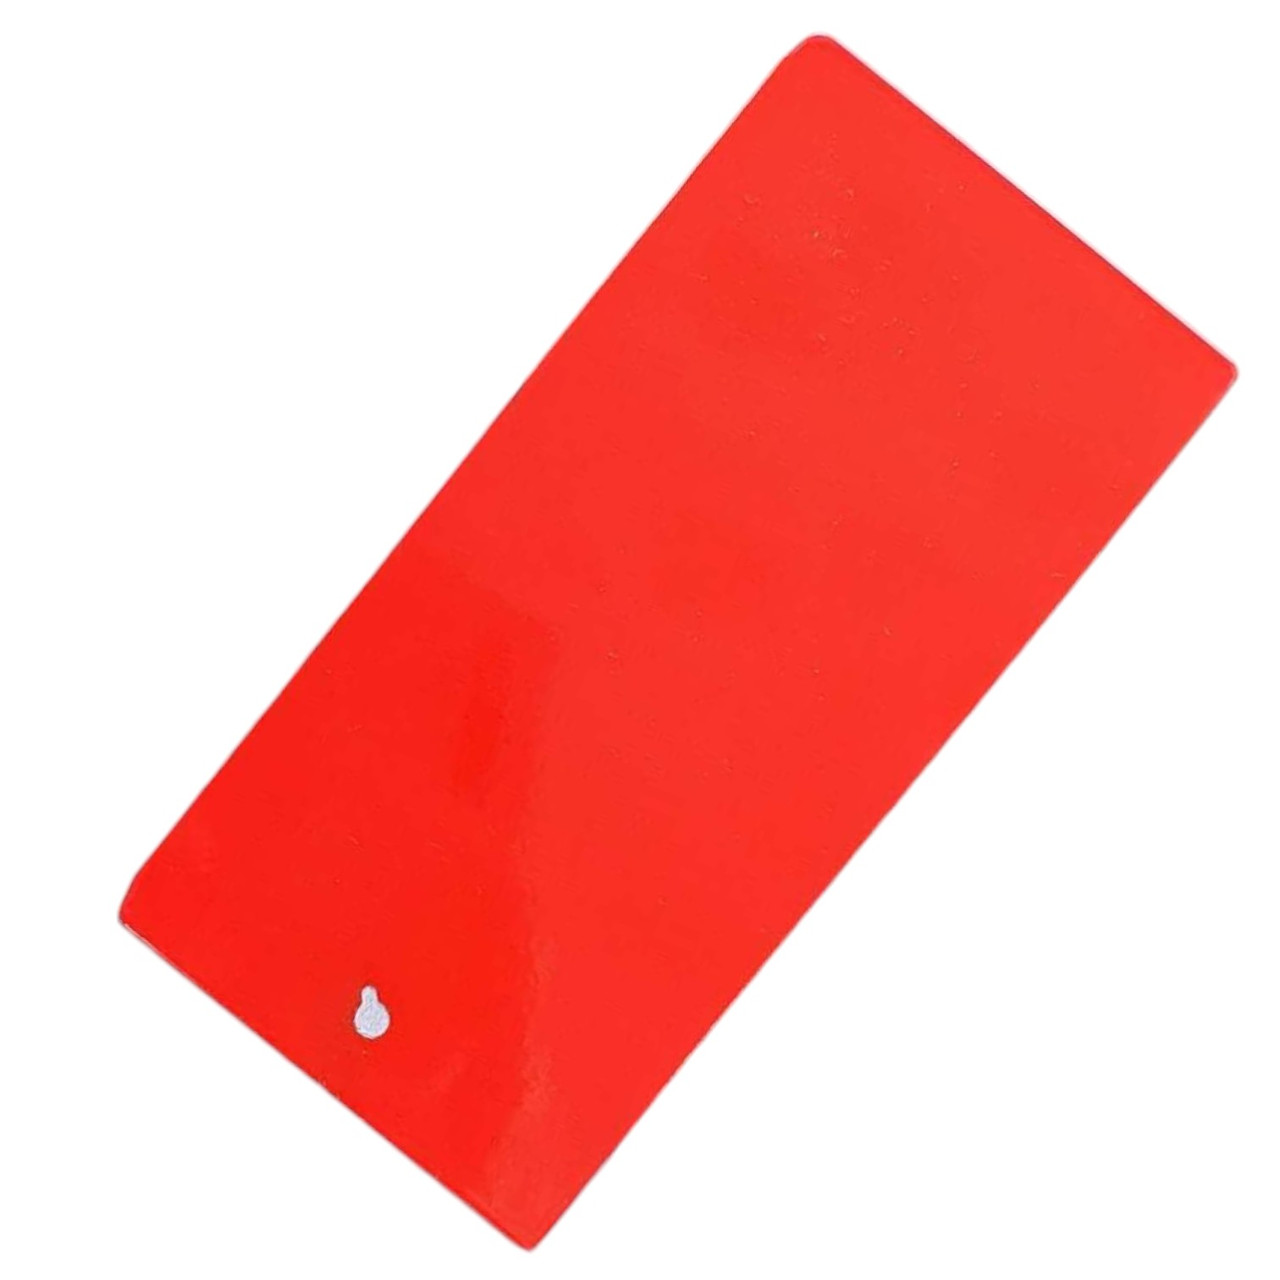 Поліефірна порошкова фарба Etika RAL 3020 Сигнально червона, Глянець, мат, шагрень